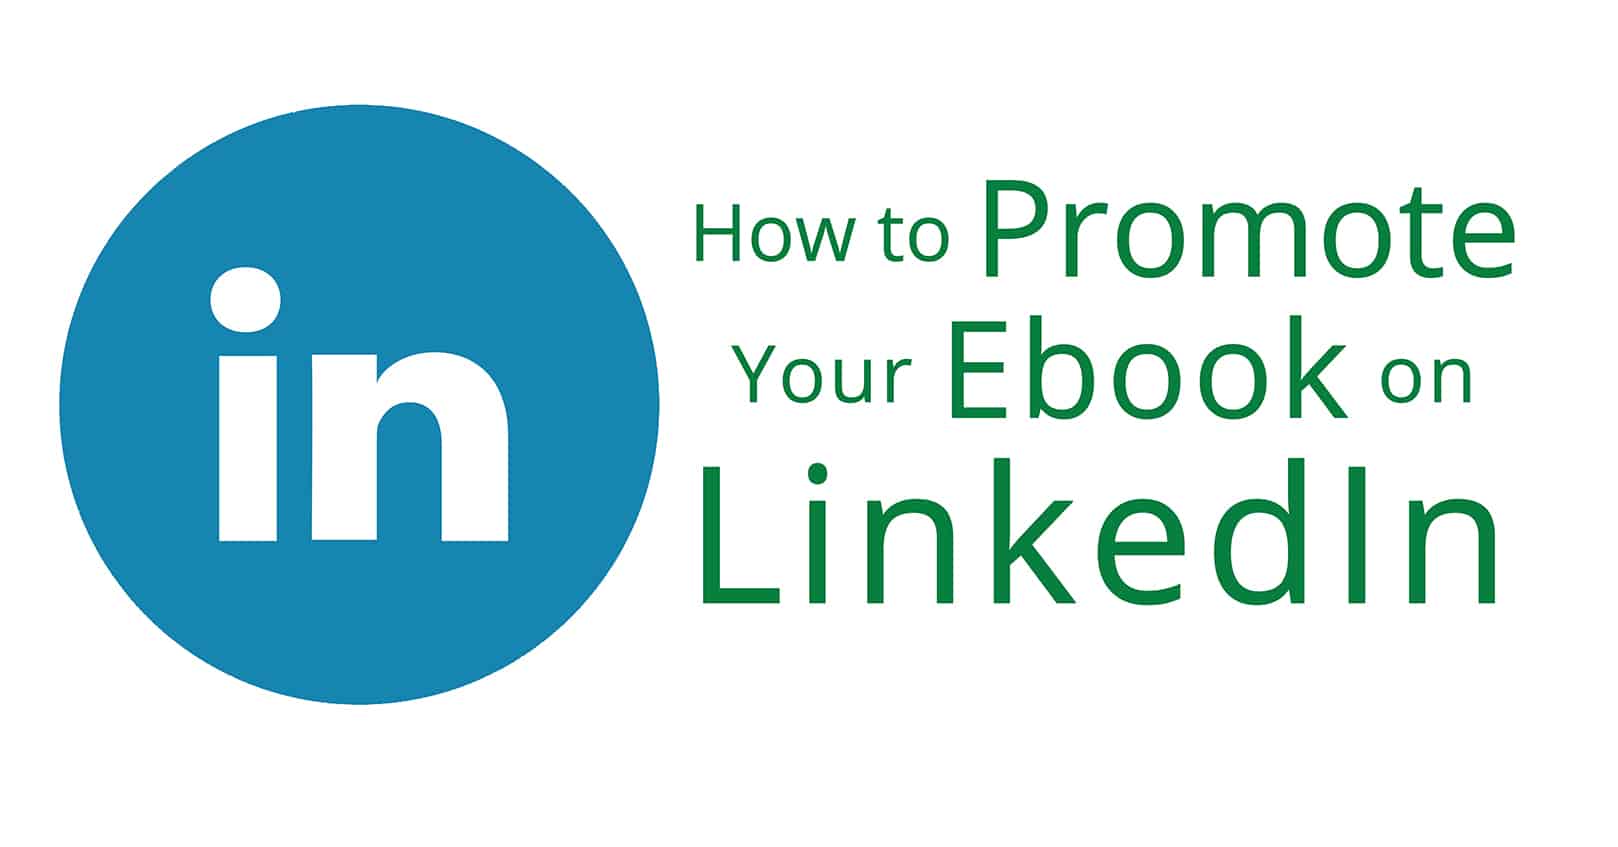 Promote your ebook on LinkedIn